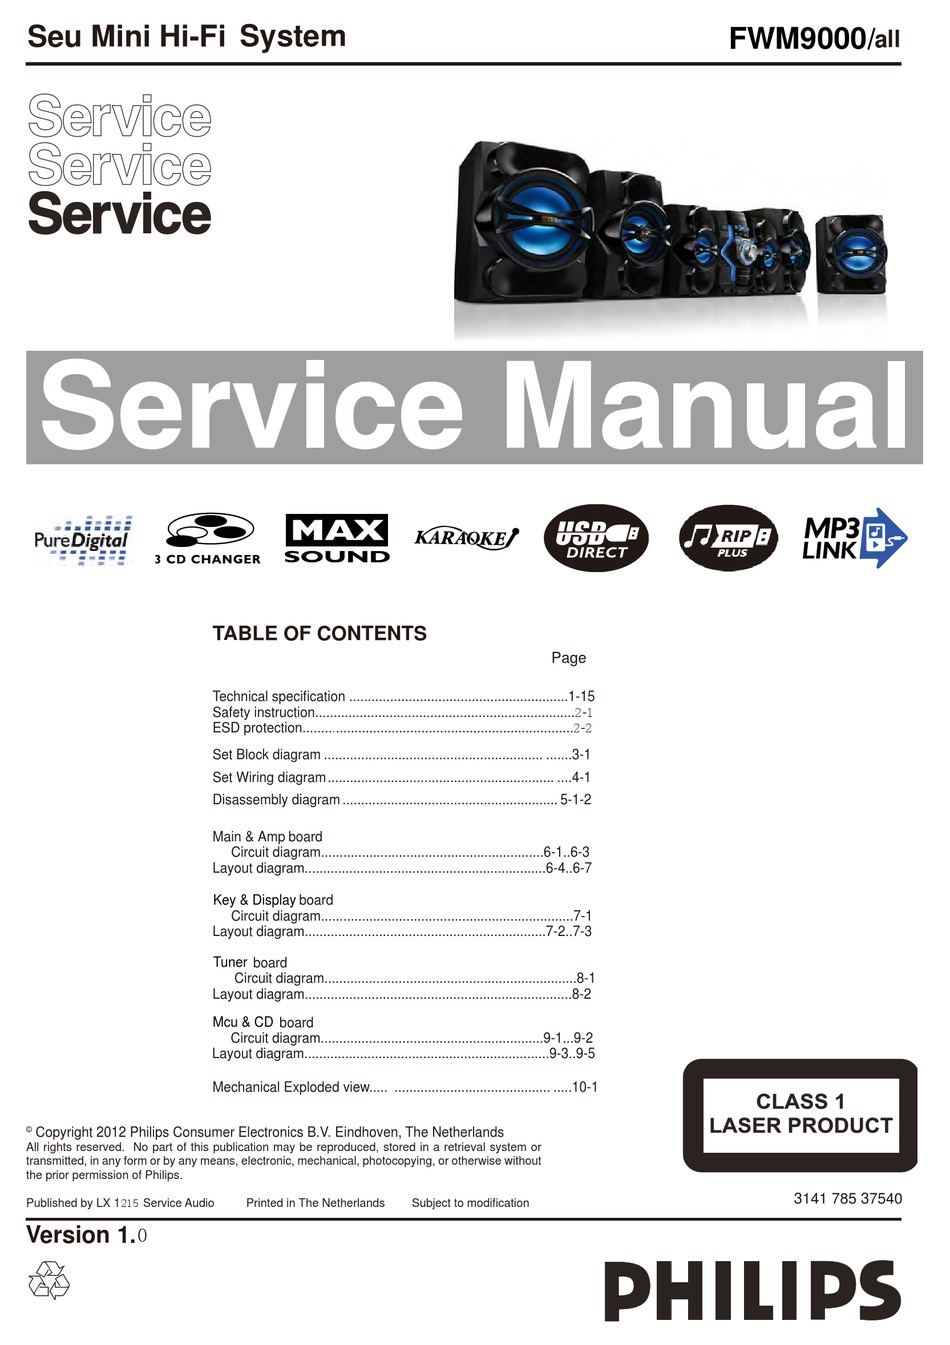 Philips Fwm9000 Service Manual Pdf Download Manualslib